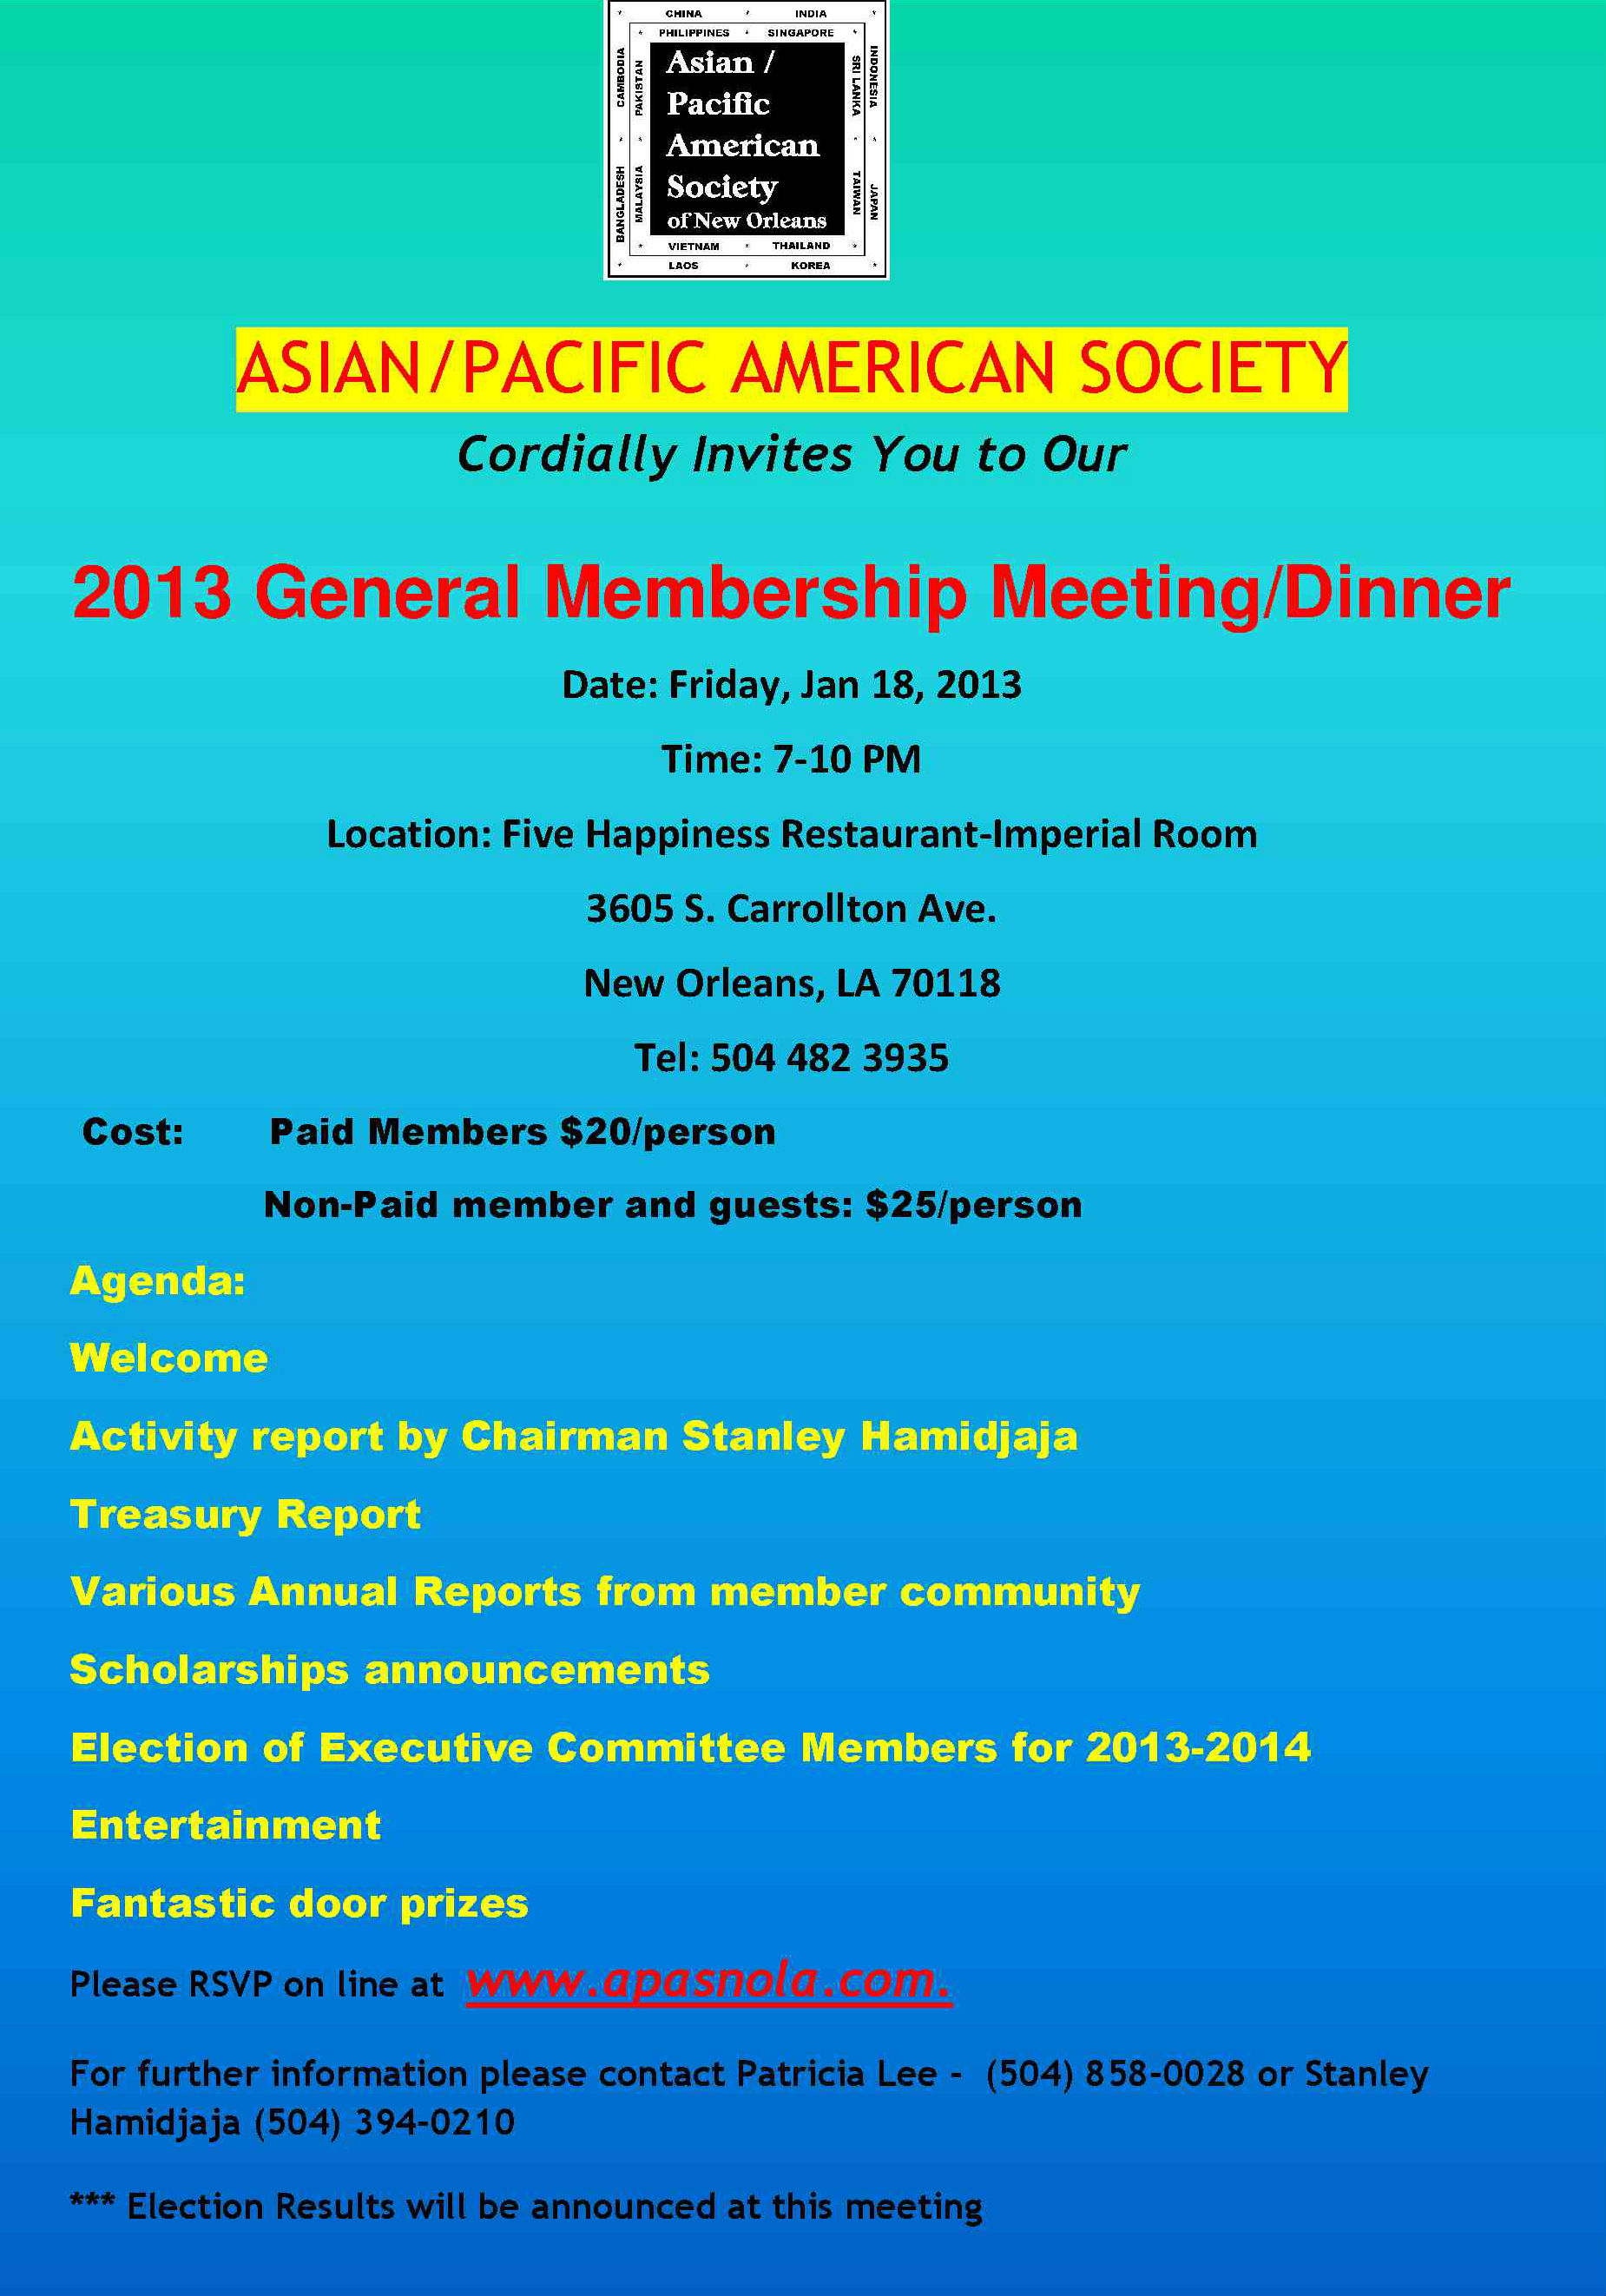 Asian/Pacific American Society - 2013 General Membership Dinner